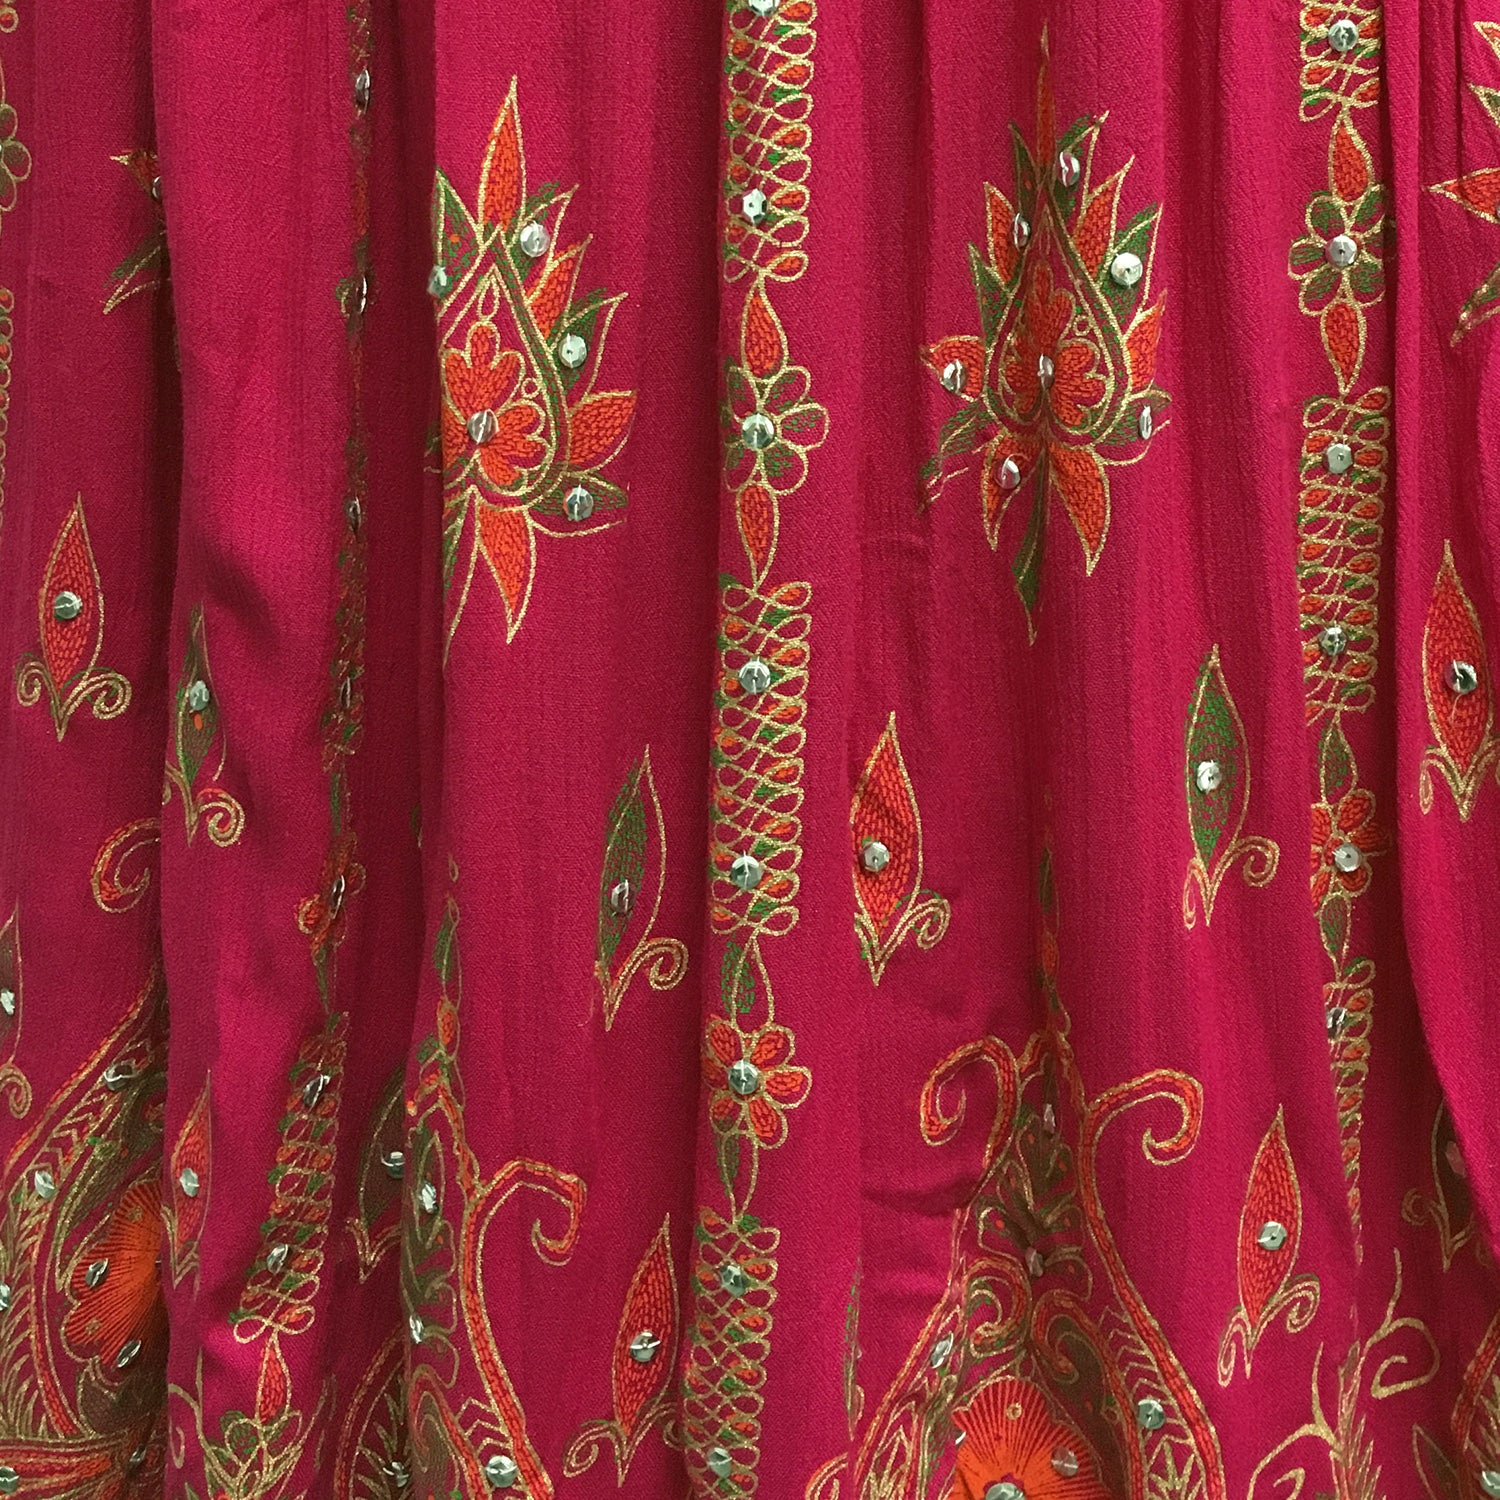 Women's Handmade Indian Sequin Crinkle Gypsy Broomstick Long Skirt - Ambali Fashion Skirts beach, bohemian, boho, dress, gypsy, handmade, new age, trendy